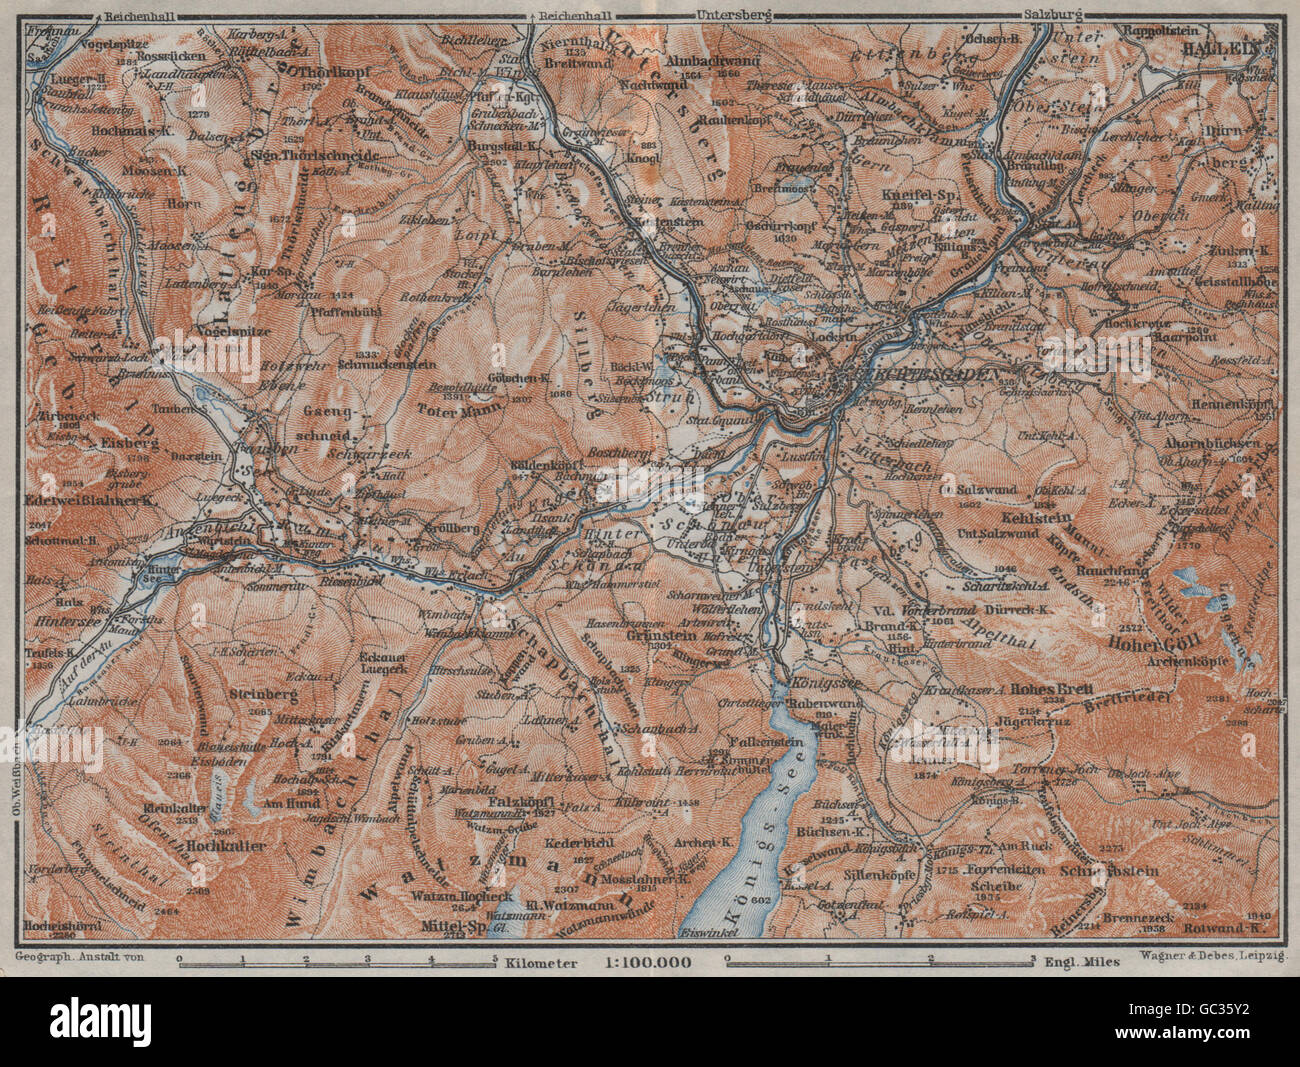 BERCHTESGADEN dintorni topo-map. Hallein Bayern Berchtesgadener Land, 1923 Foto Stock